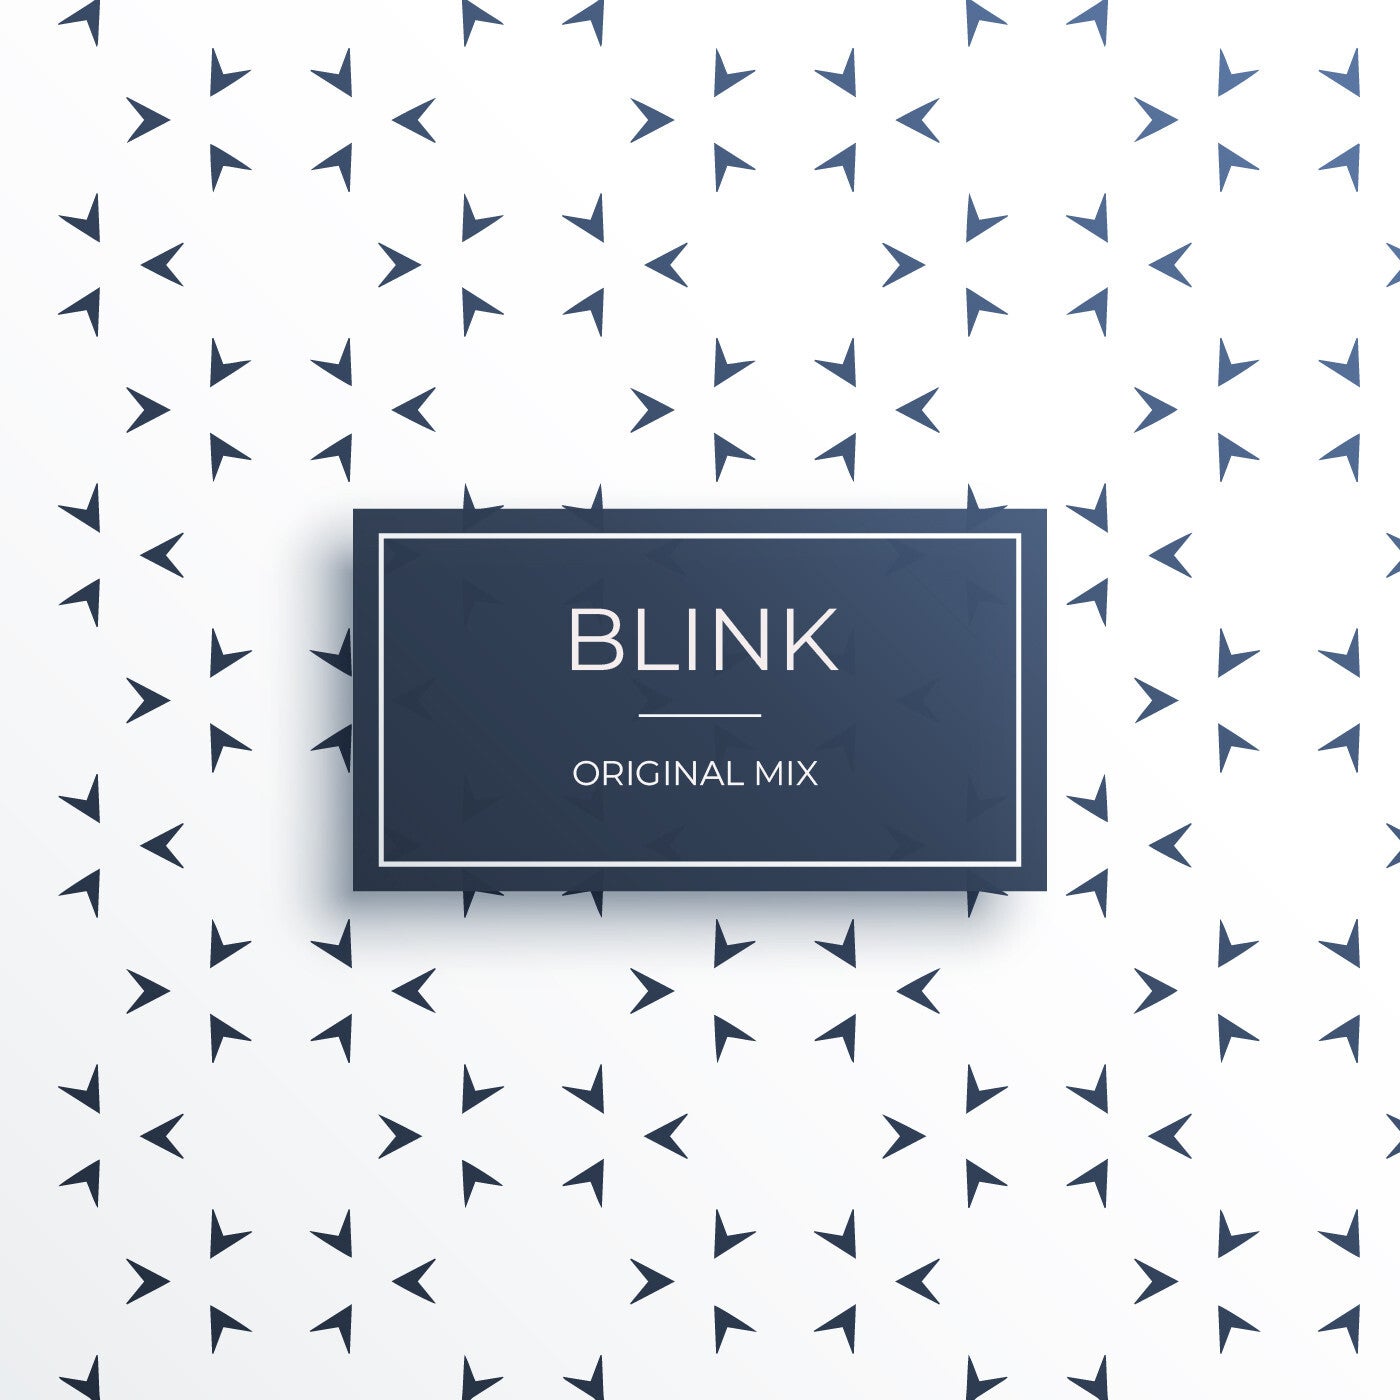 Blink (Original Mix)